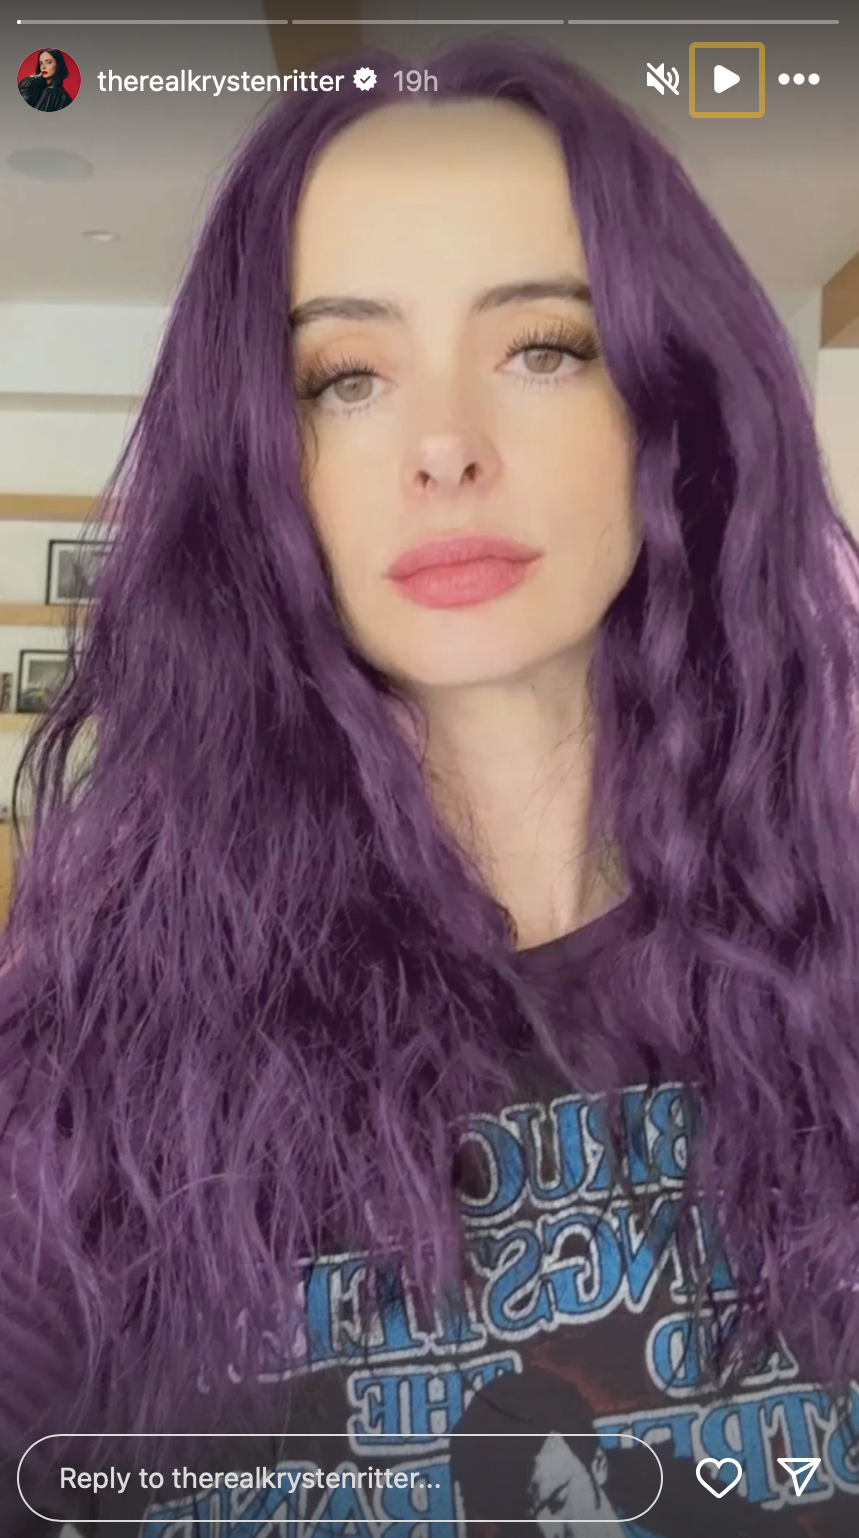 krysten-ritter-with-purple-hair-on-instagram-story.png